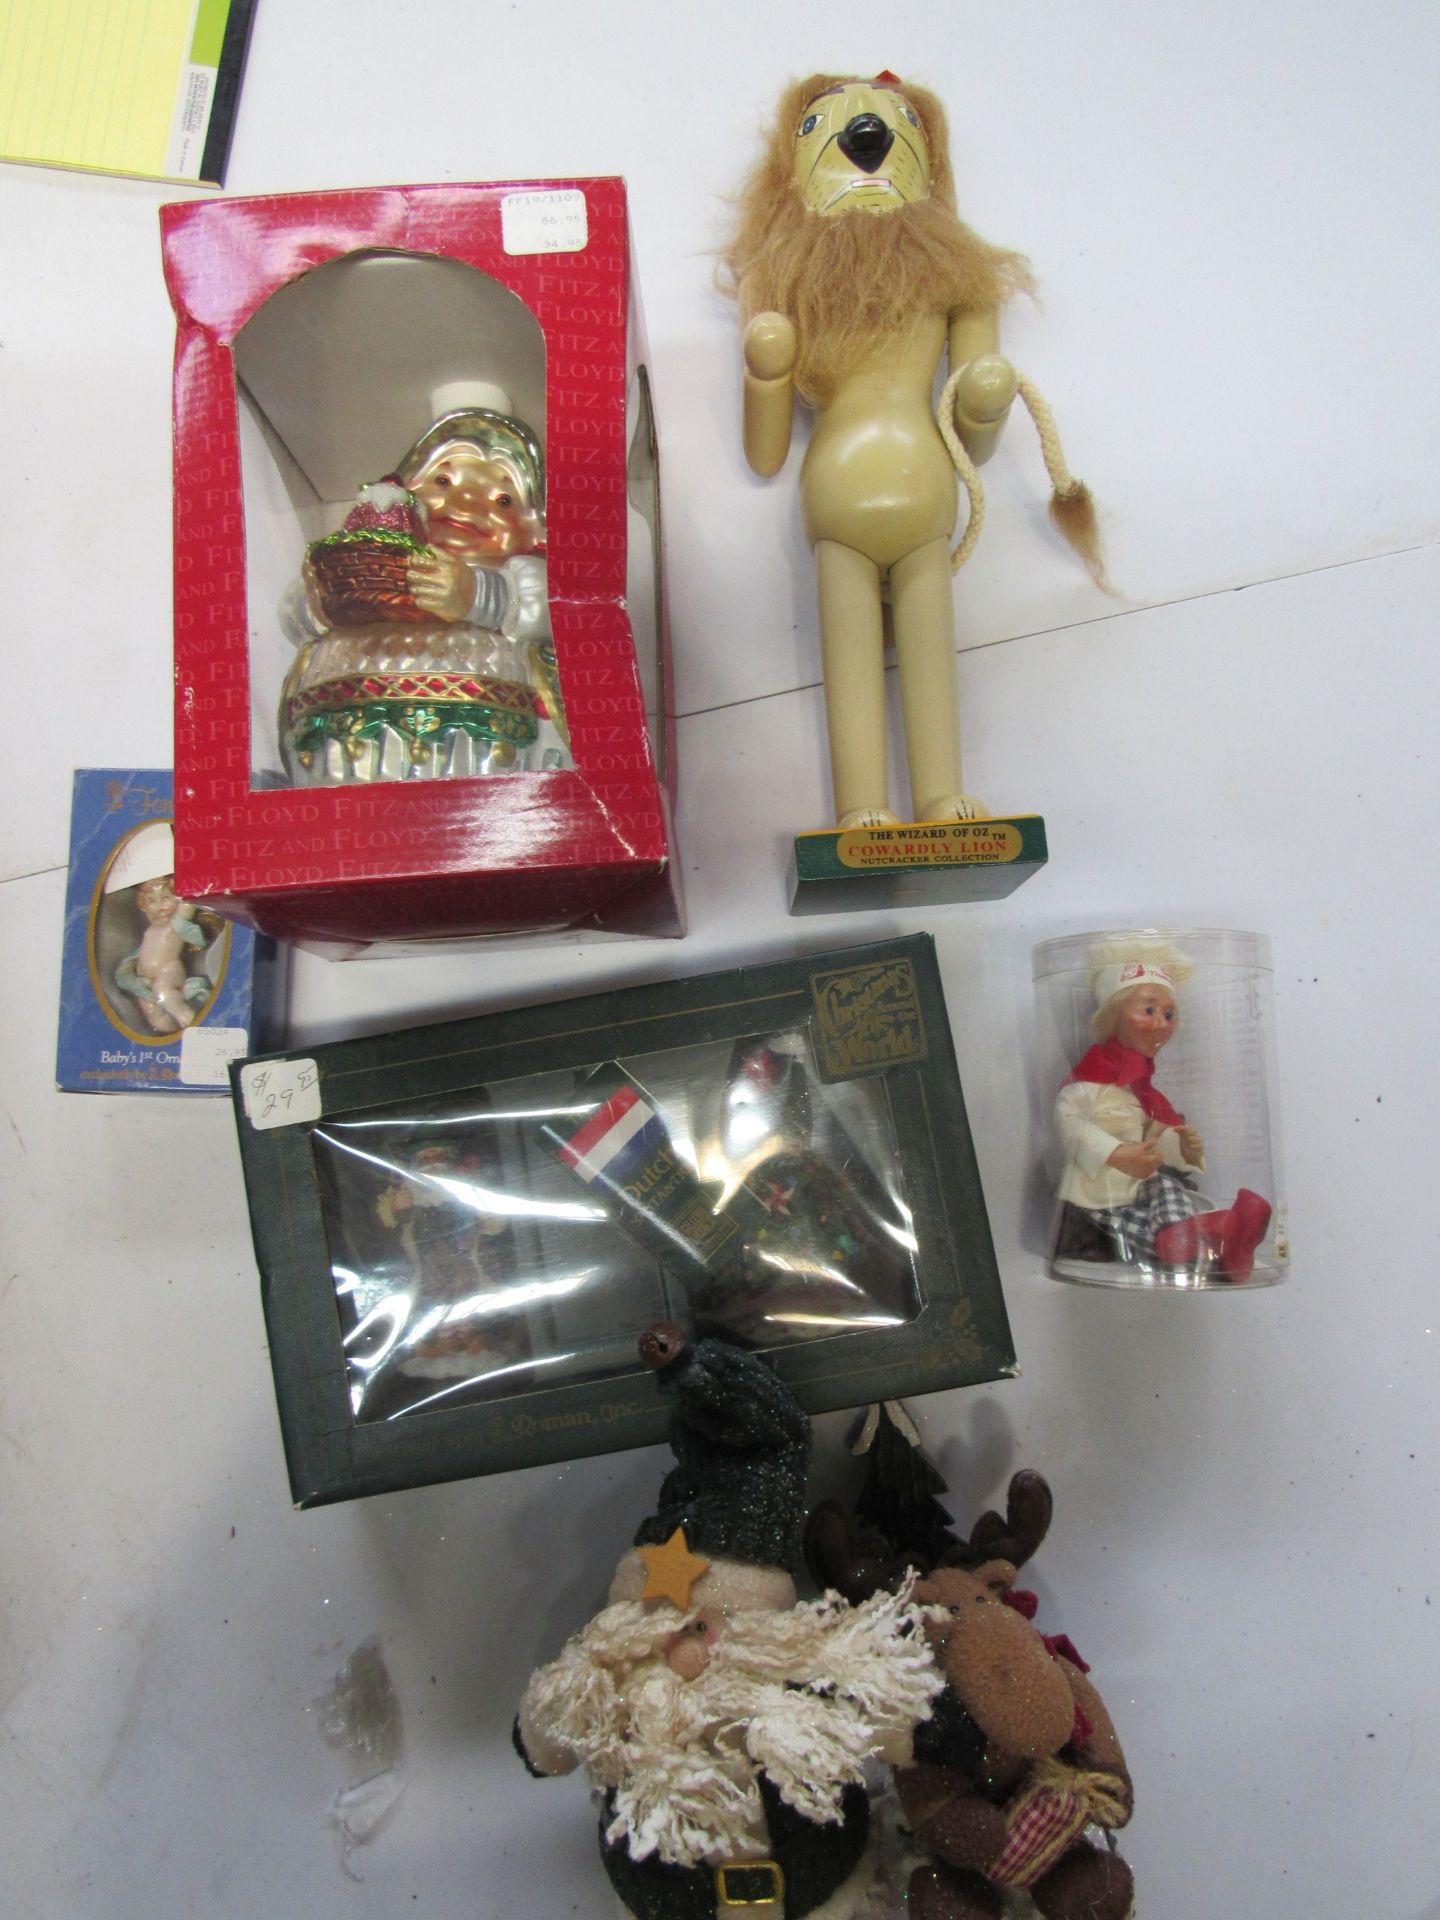 Group of figures and decorations: Cowardly Lion nutcracker, baker, Santa